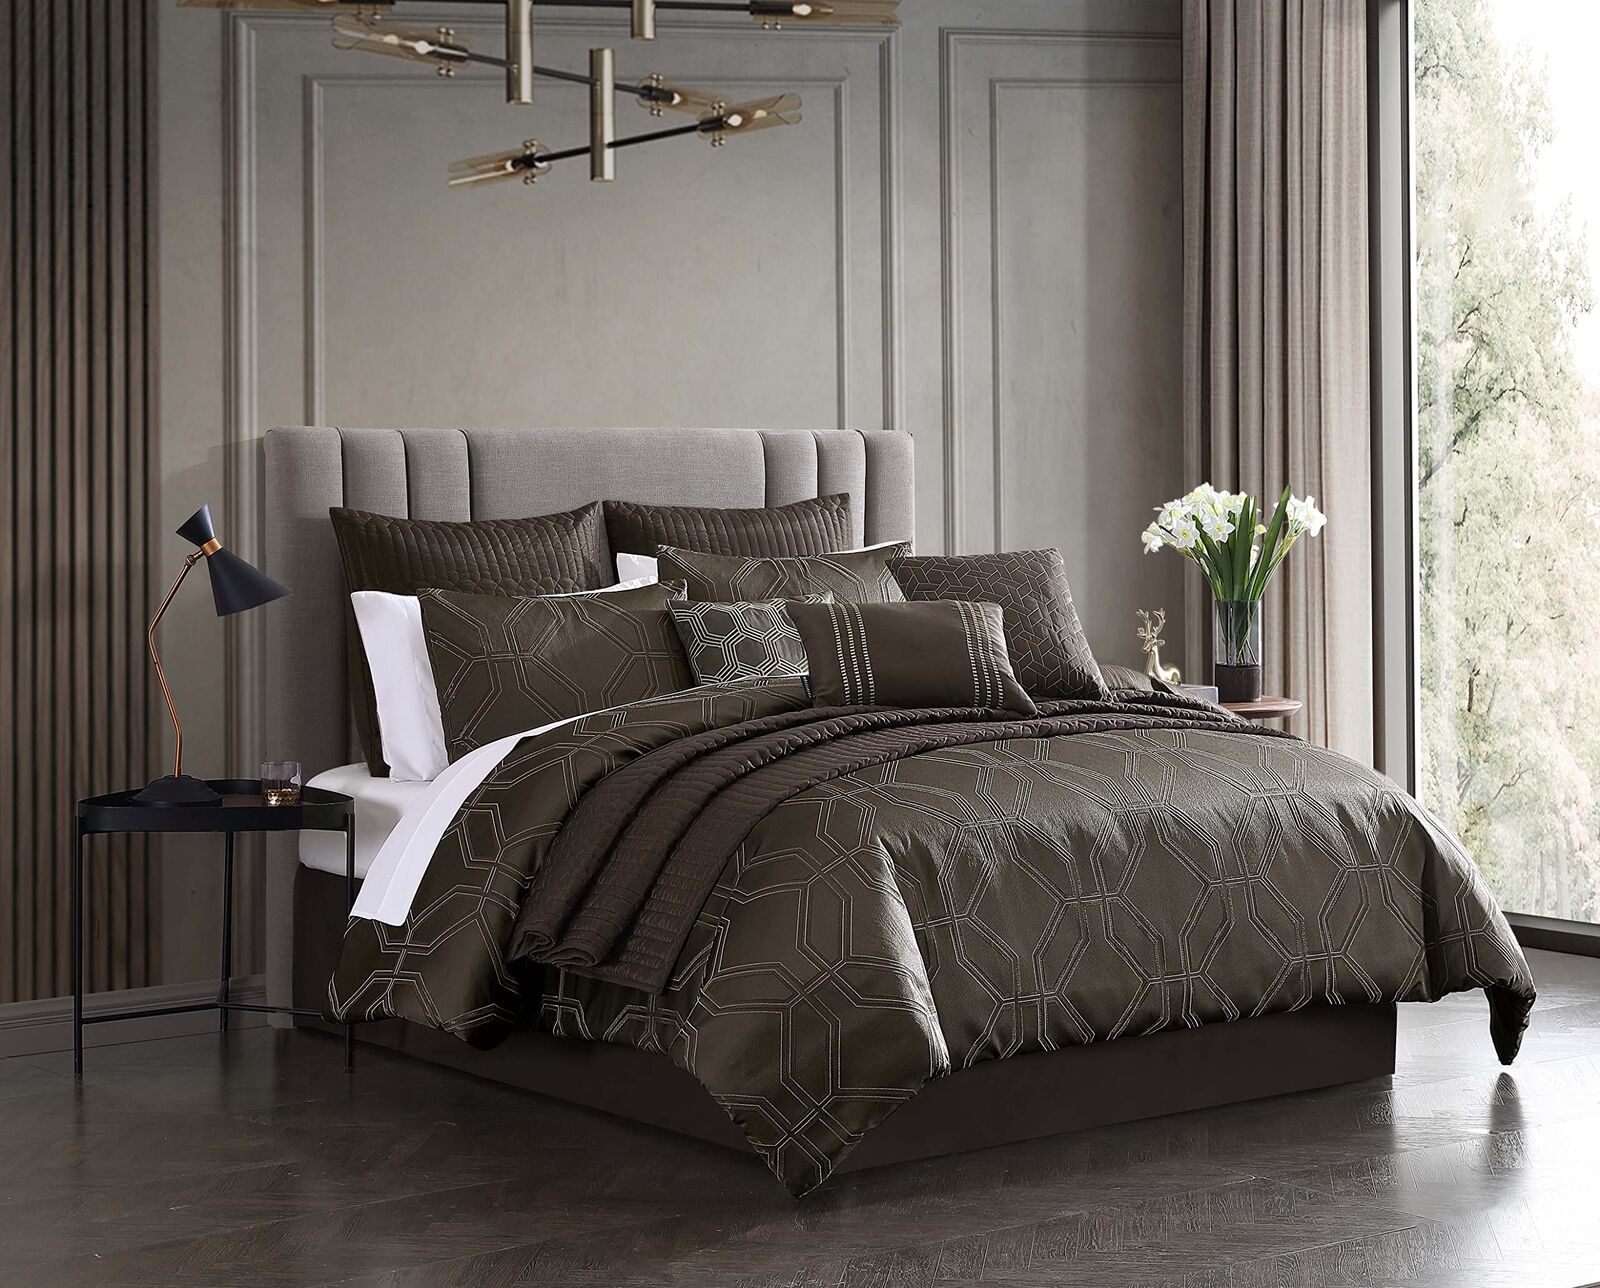 Riverbrook Home Elegant Collection Comforter Set, King, Rico - Mushroom, 10 P...